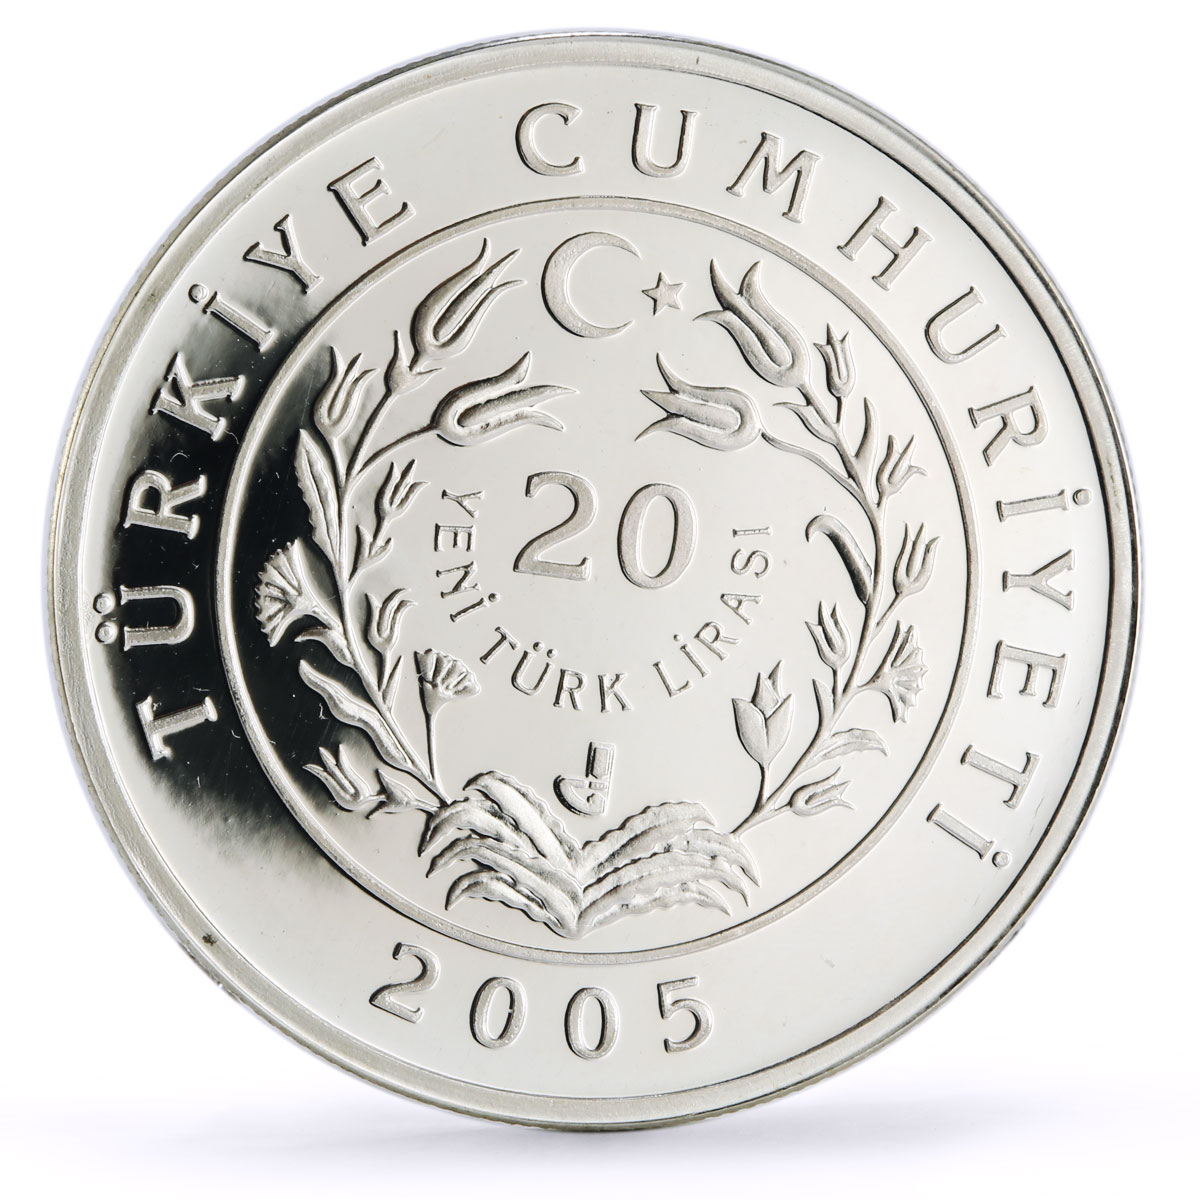 Turkey 20 lira Conservation Wildlife Kangal Dog Fauna proof silver coin 2005